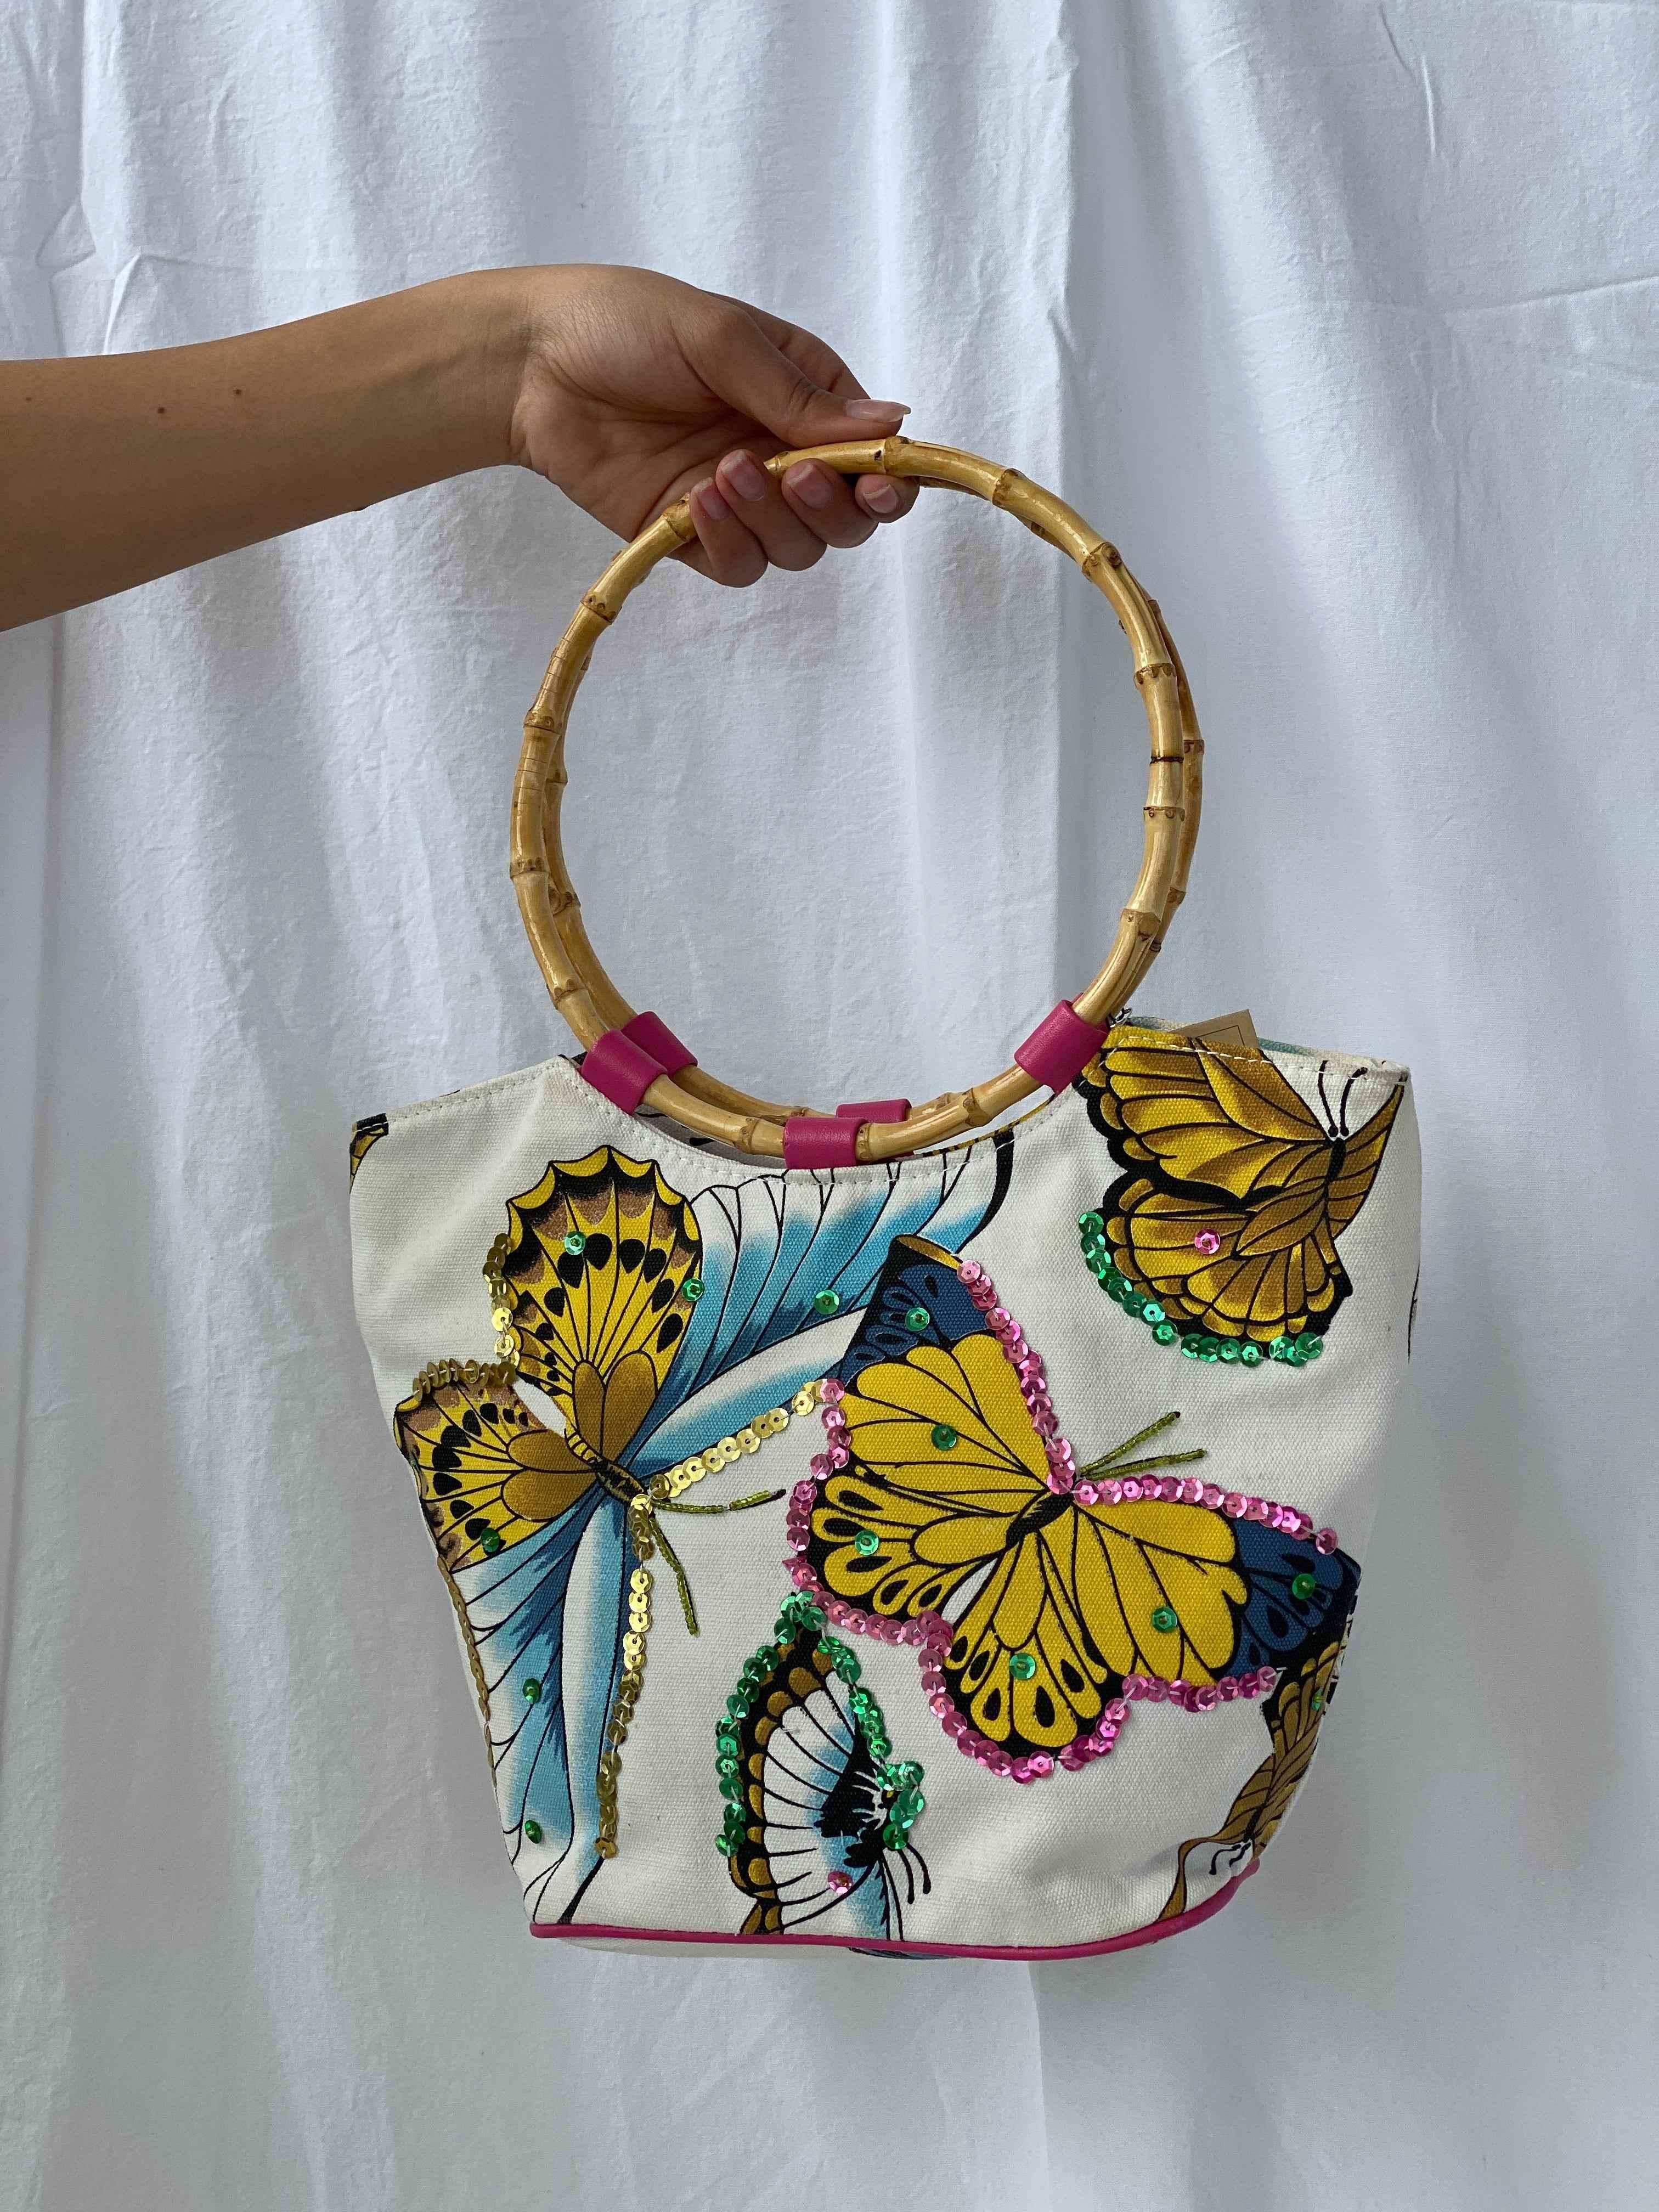 Y2K Butterfly Handbag - Balagan Vintage Handbags 00s, bag, handbag